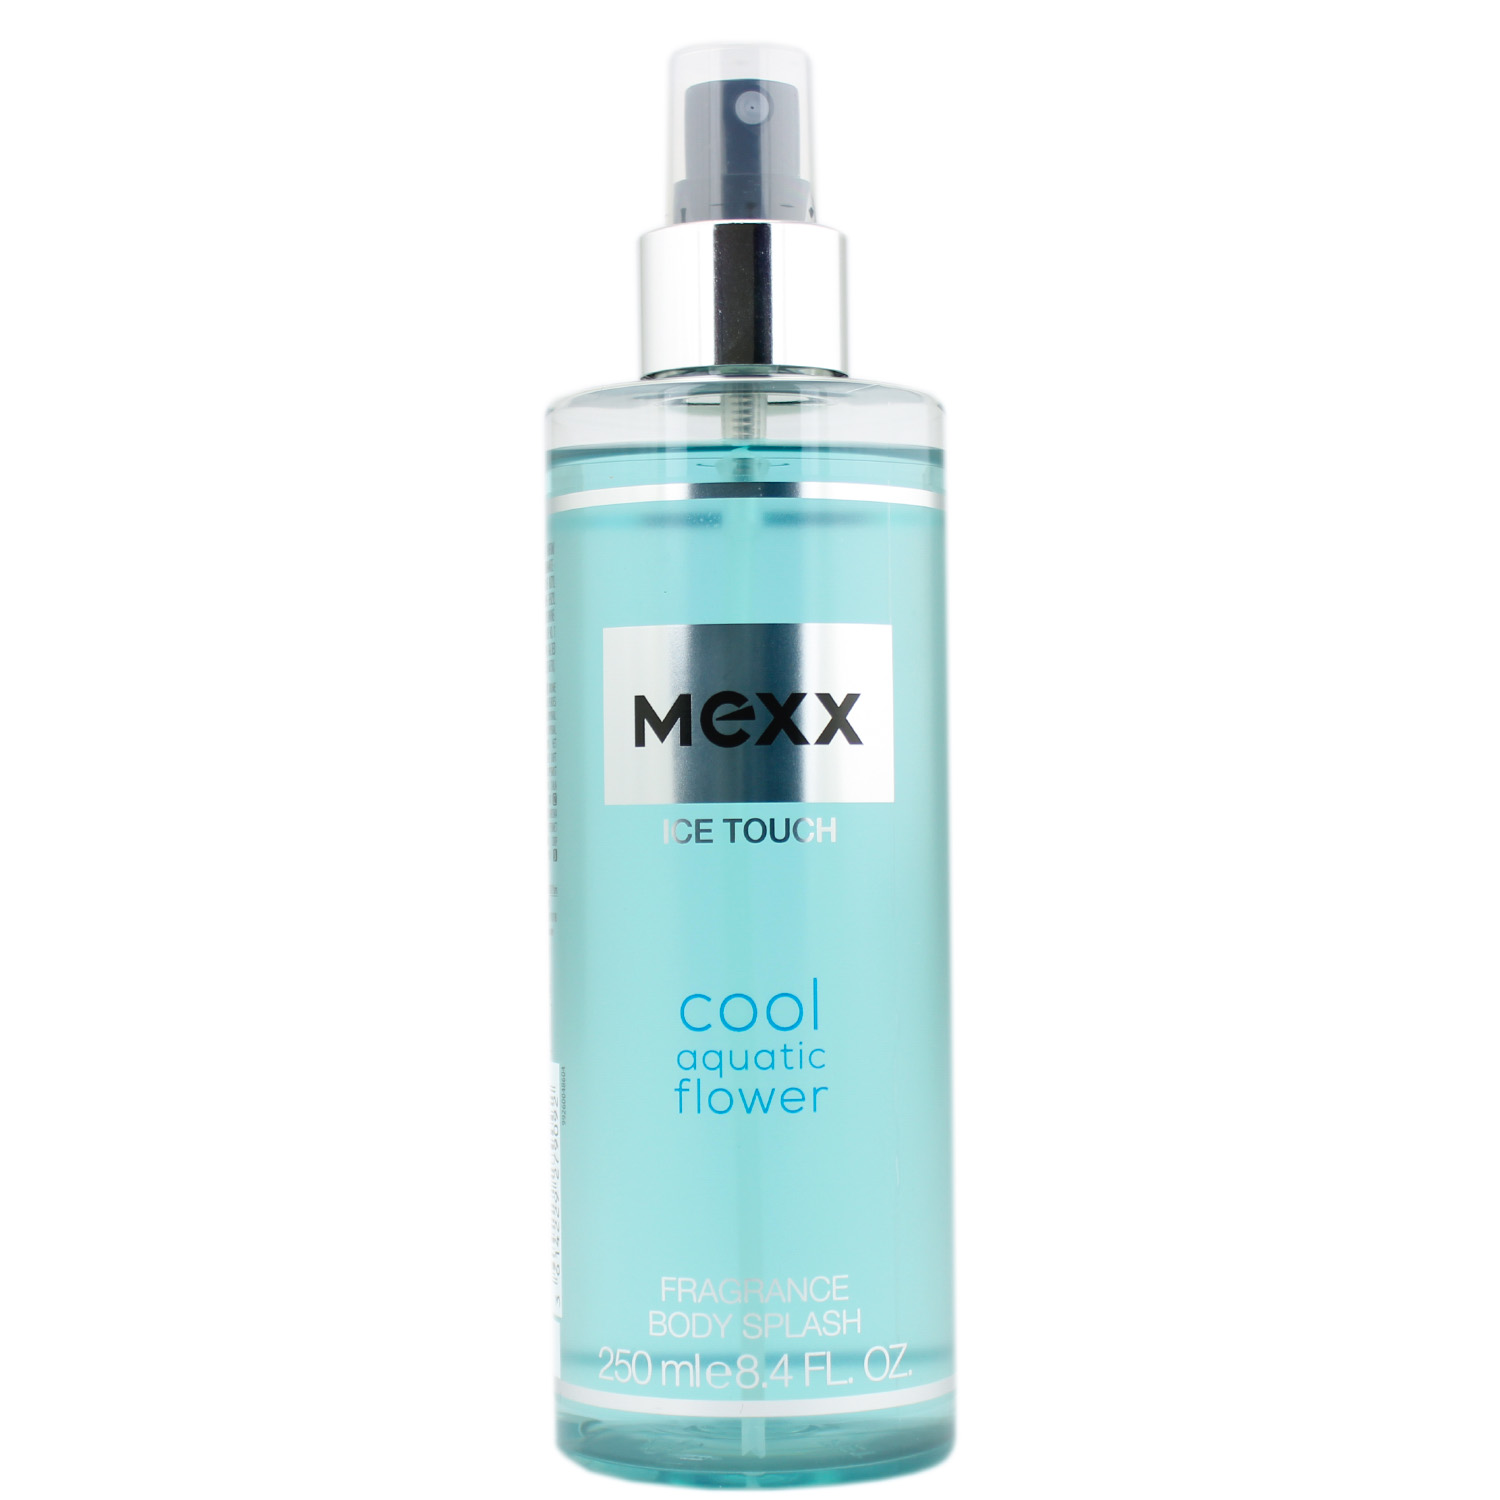 Mexx Ice Touch for Woman Cool Aquatic Flower Body Splash 250ml